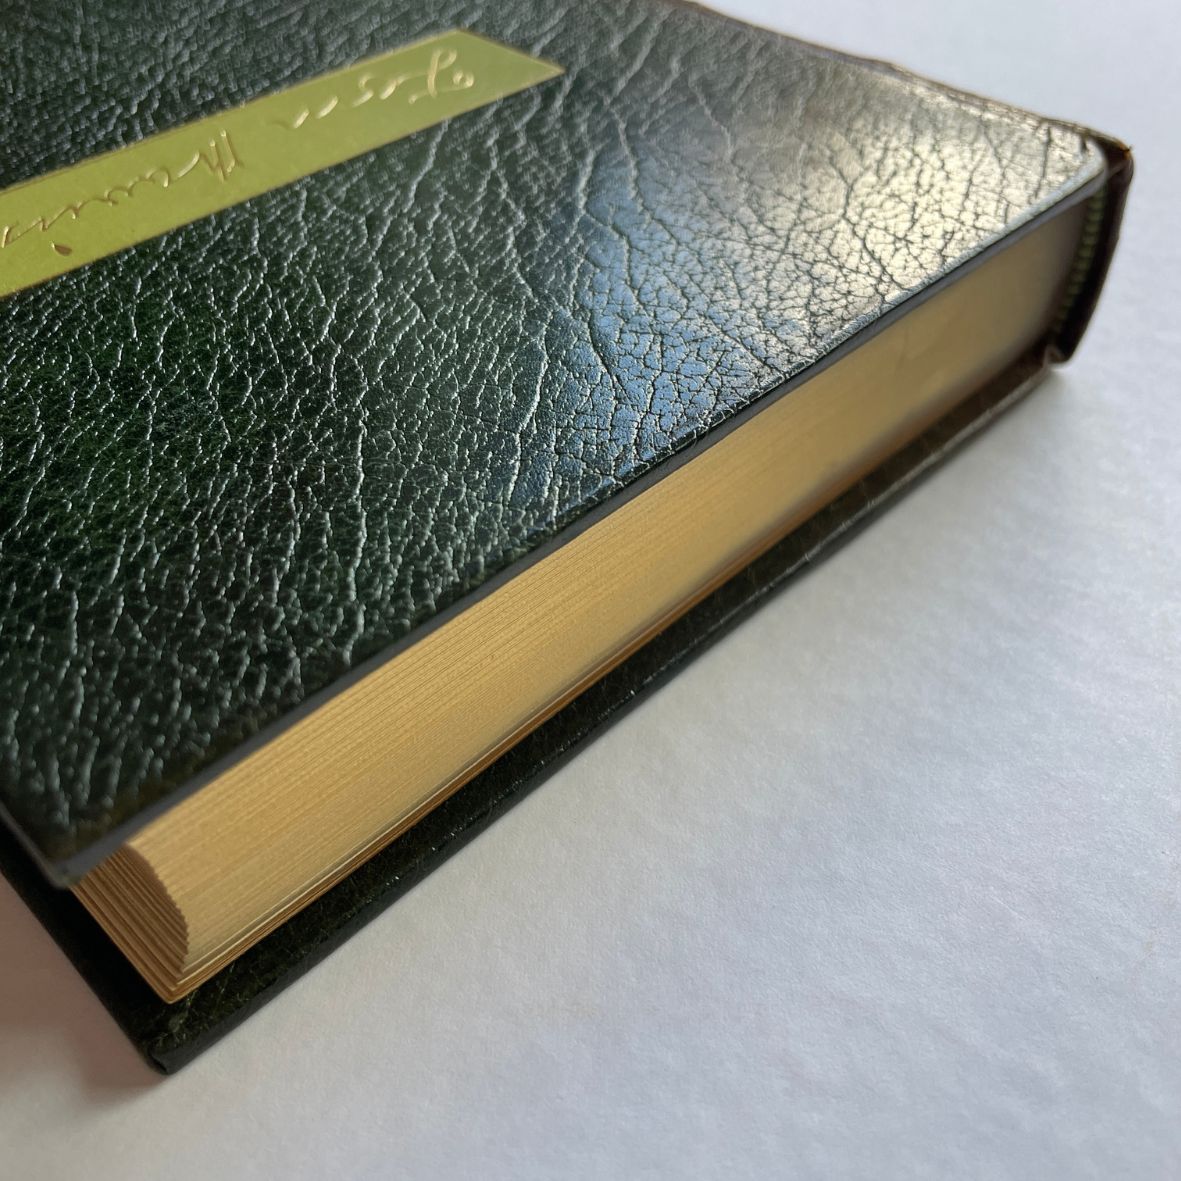 The Life of Tom Morris - Rare Leather Bound No. Edt 54/200